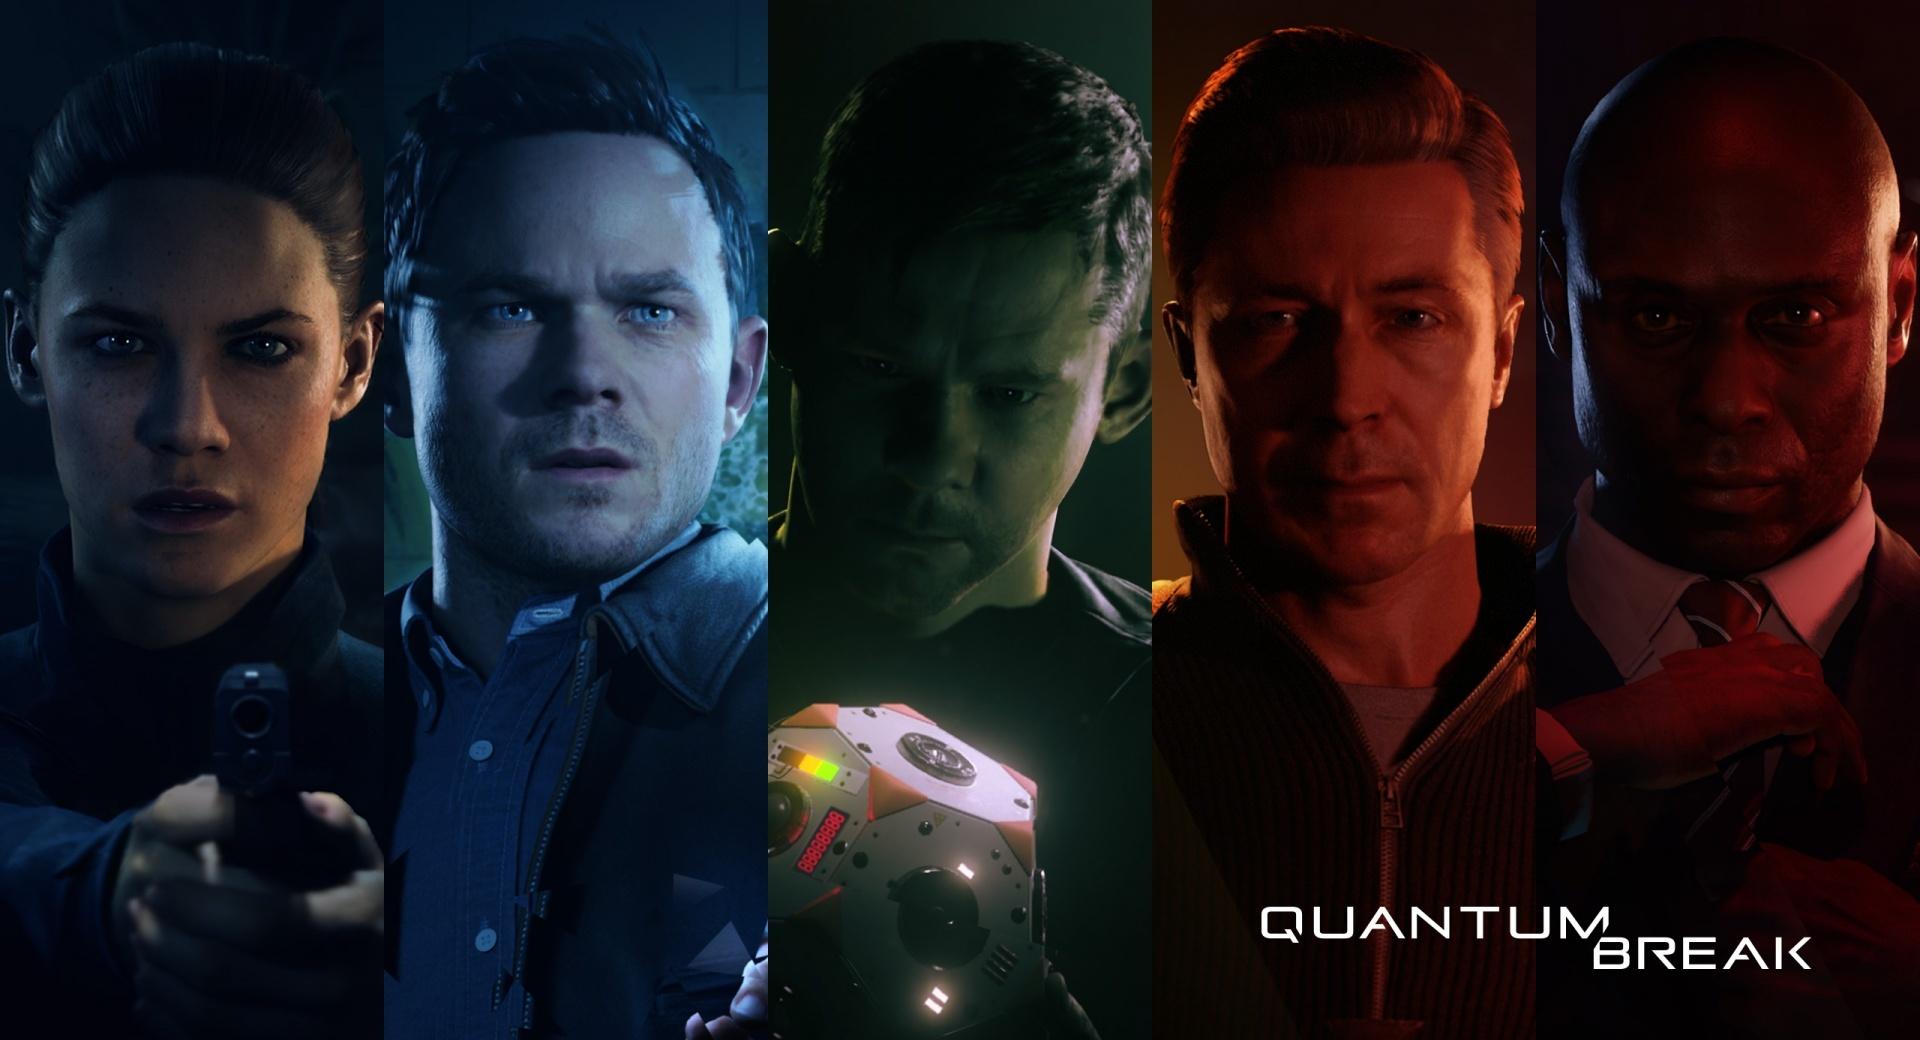 Quantum Break Cast at 1600 x 1200 size wallpapers HD quality